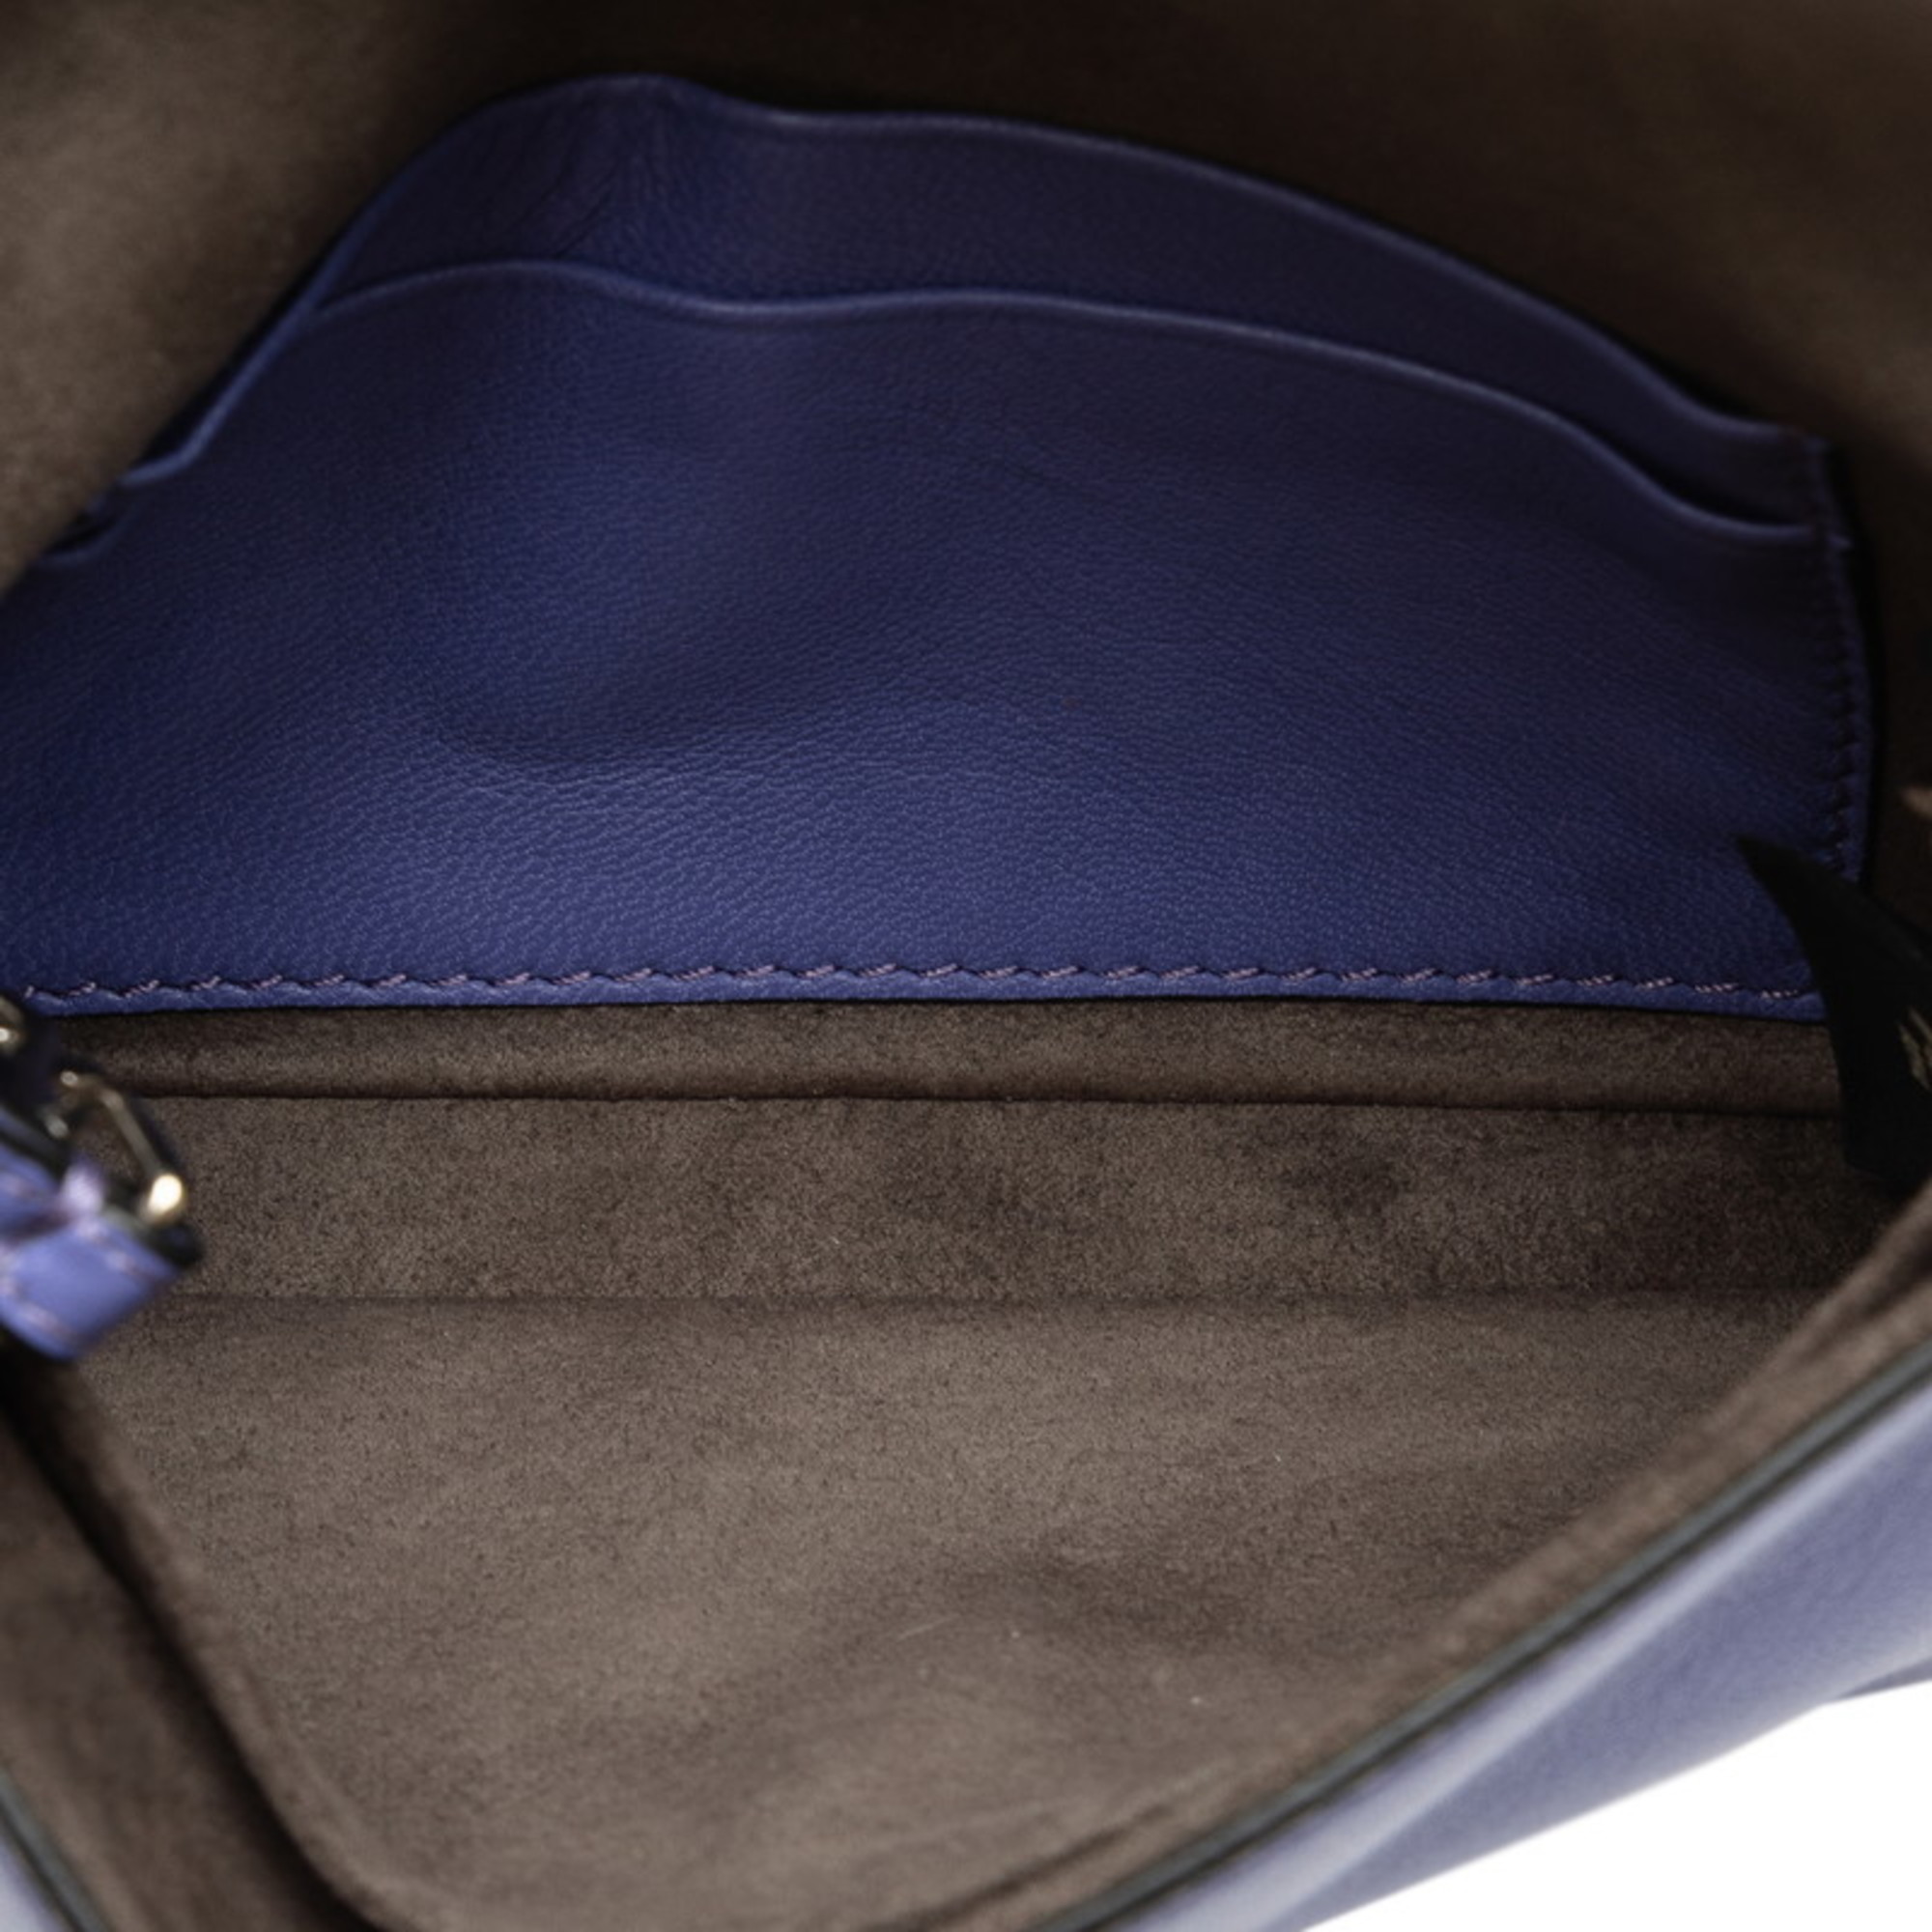 FENDI Monster Micro Bucket Chain Handbag Shoulder Bag 8M0354 Purple Yellow Leather Suede Ladies